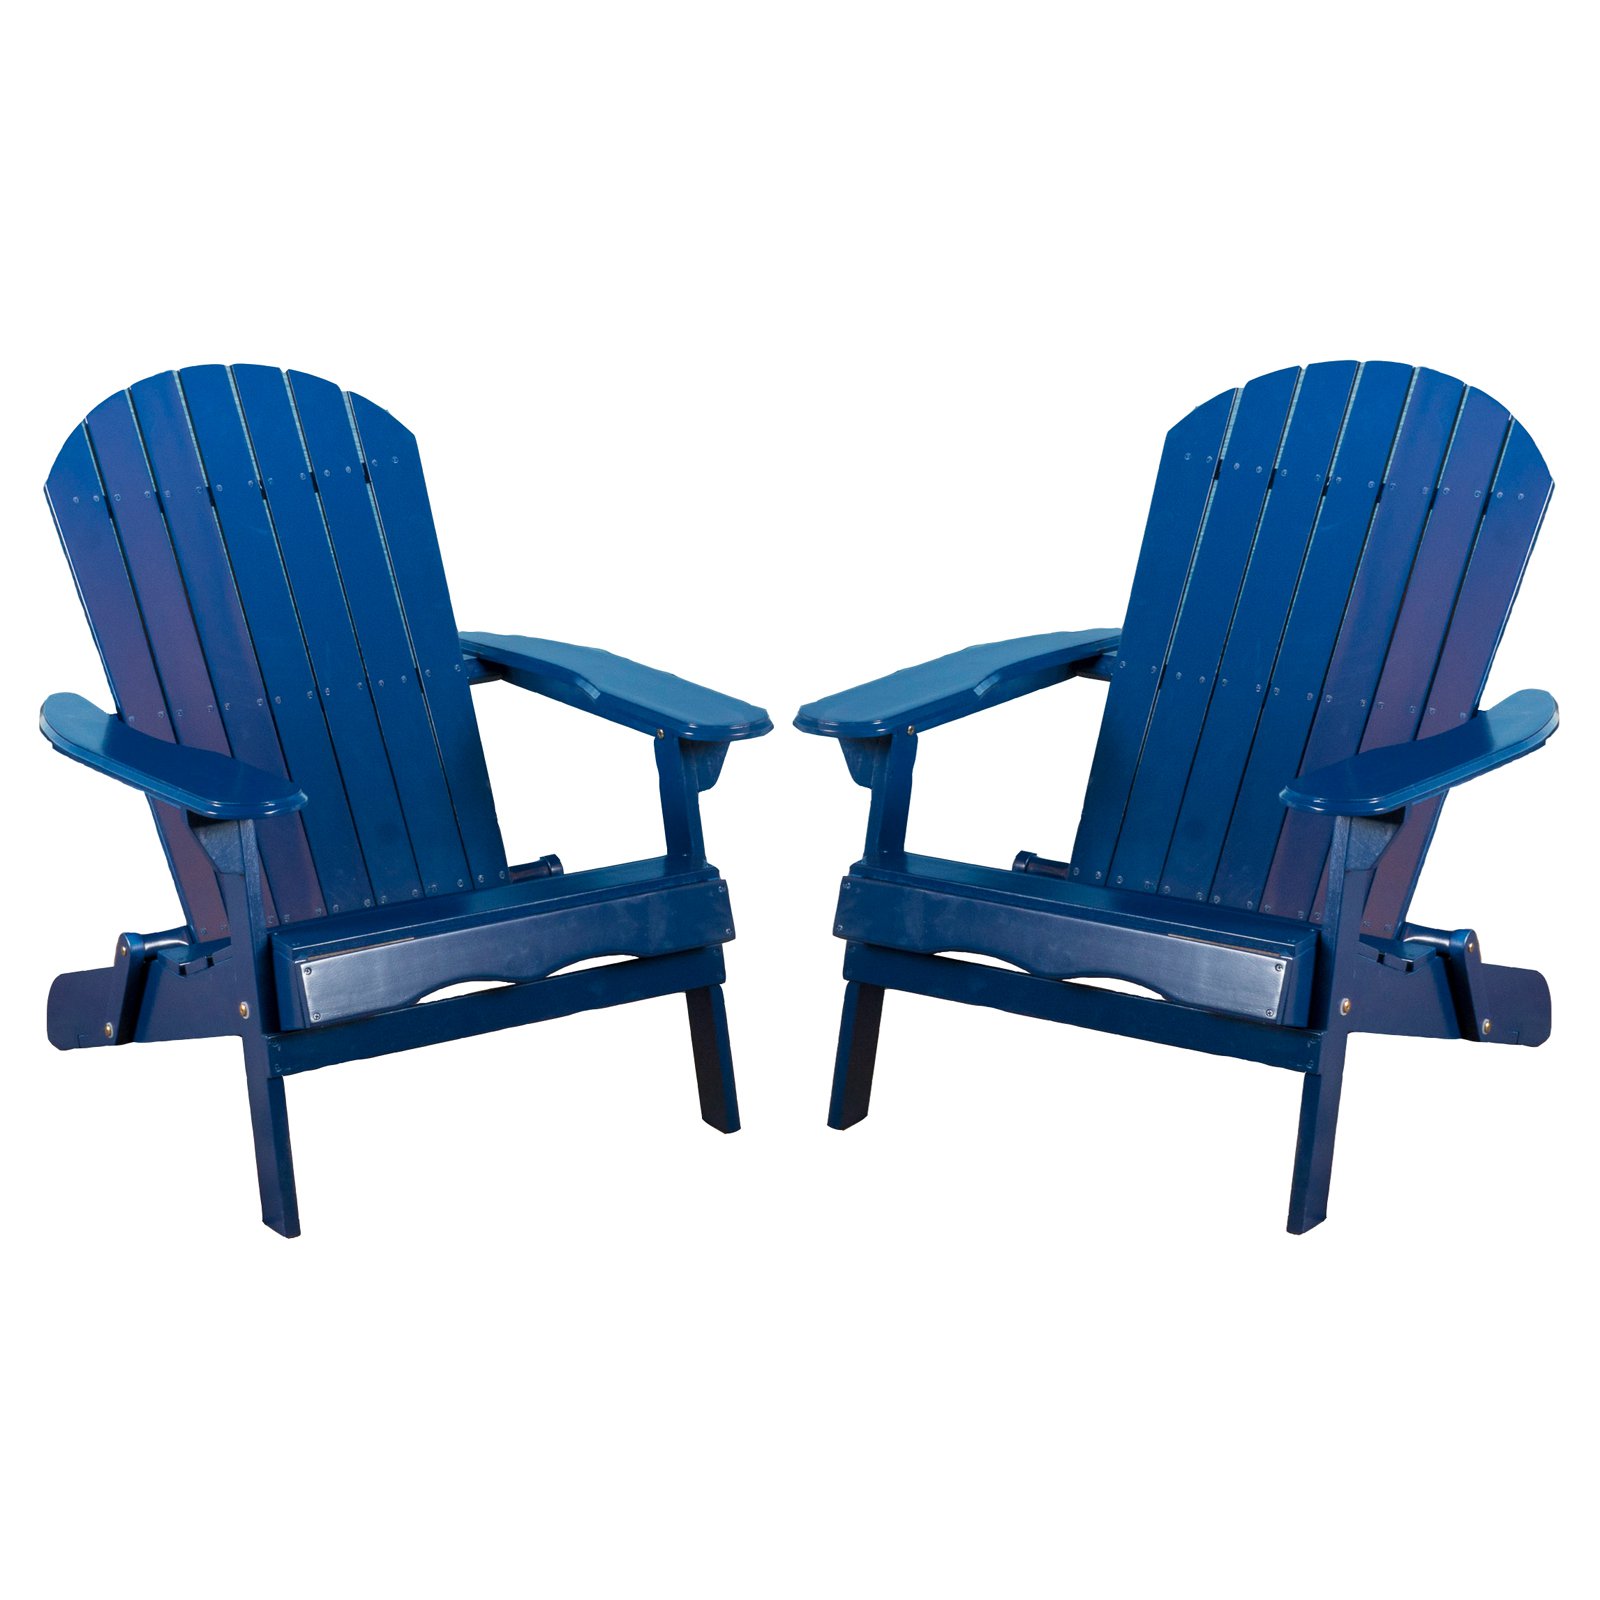 Foldable Adirondack Chair - image 1 of 9